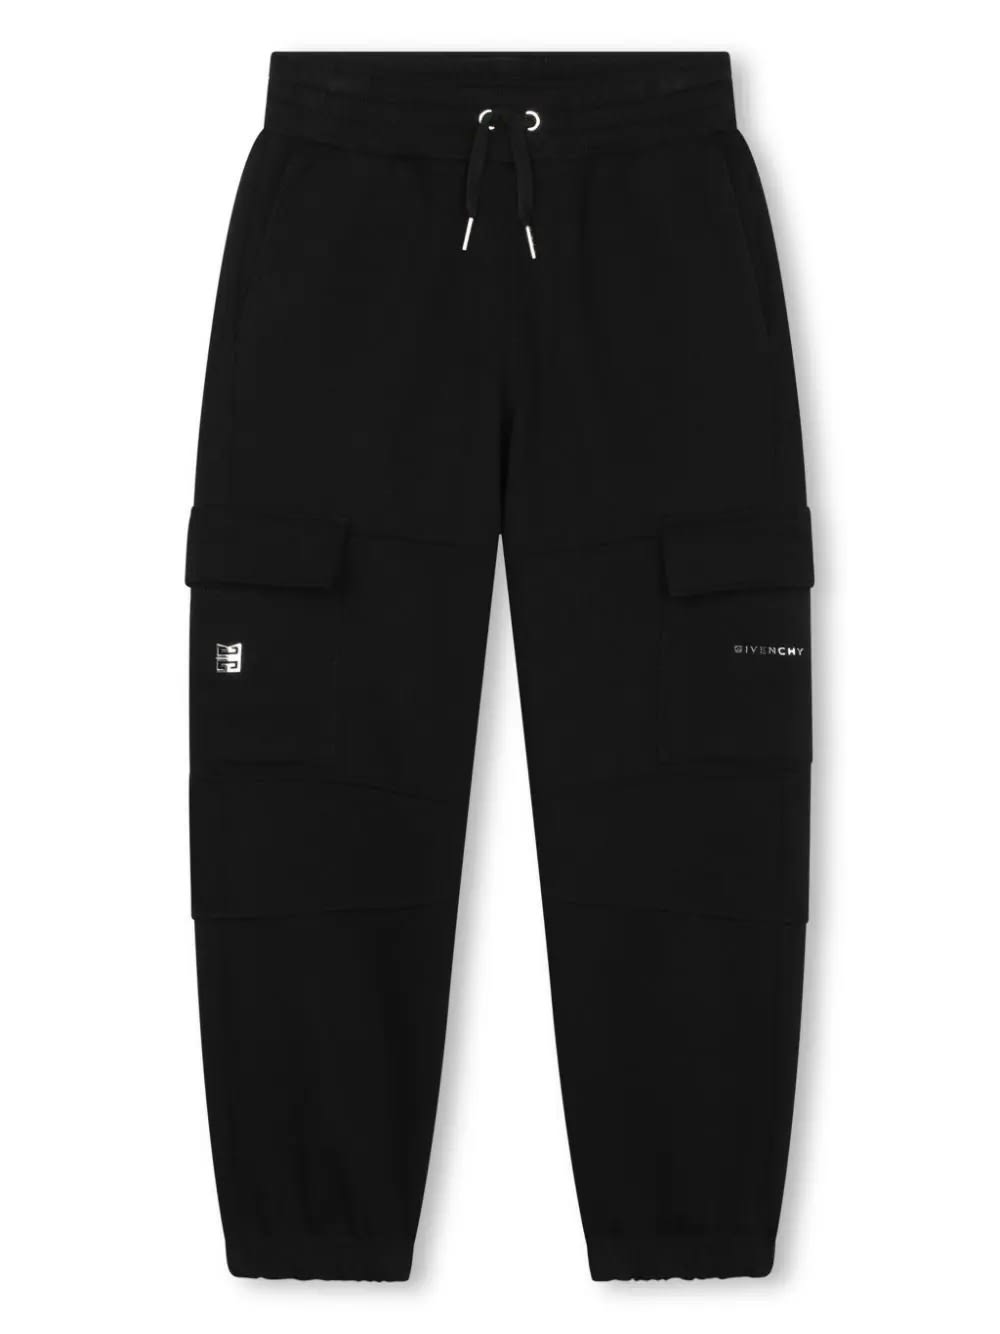 Shop Givenchy Black Cargo Style Sports Pants